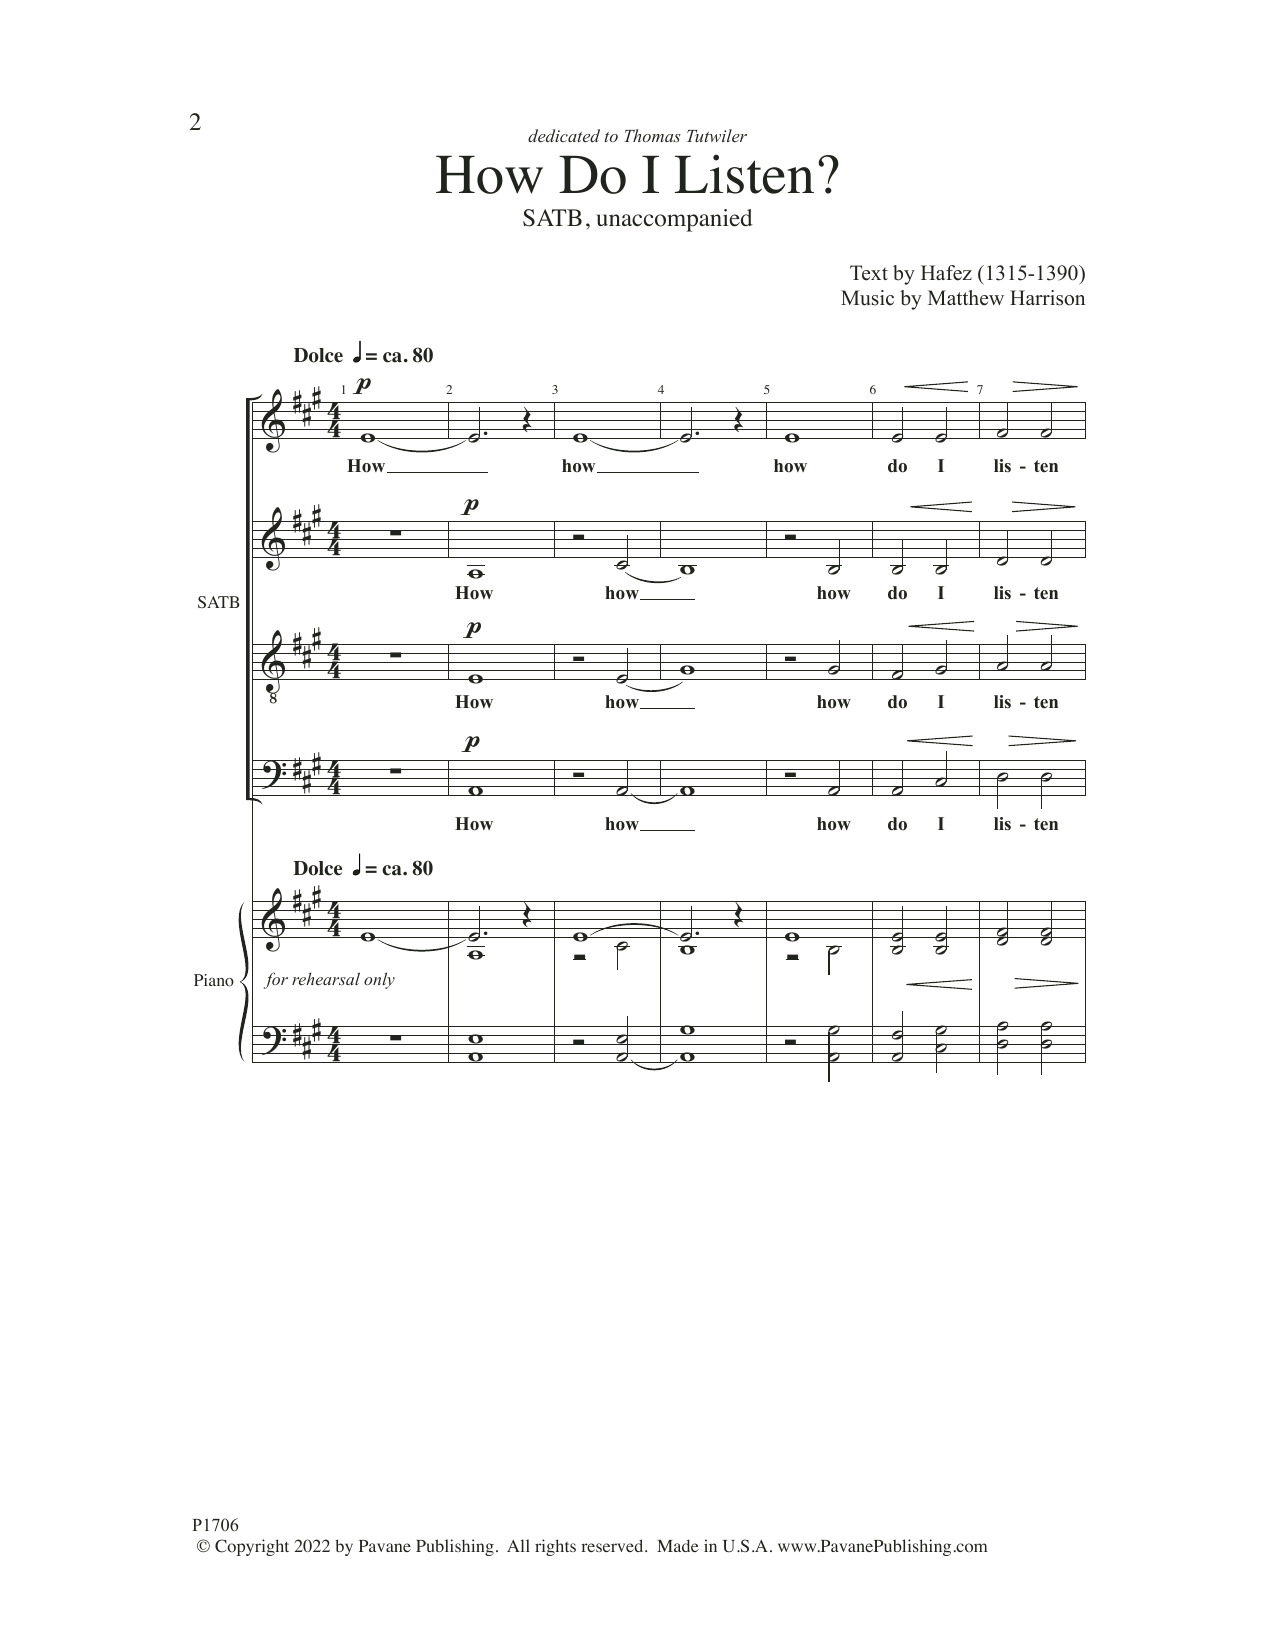 Matthew Harrison How Do I Listen? Sheet Music Notes & Chords for SATB Choir - Download or Print PDF